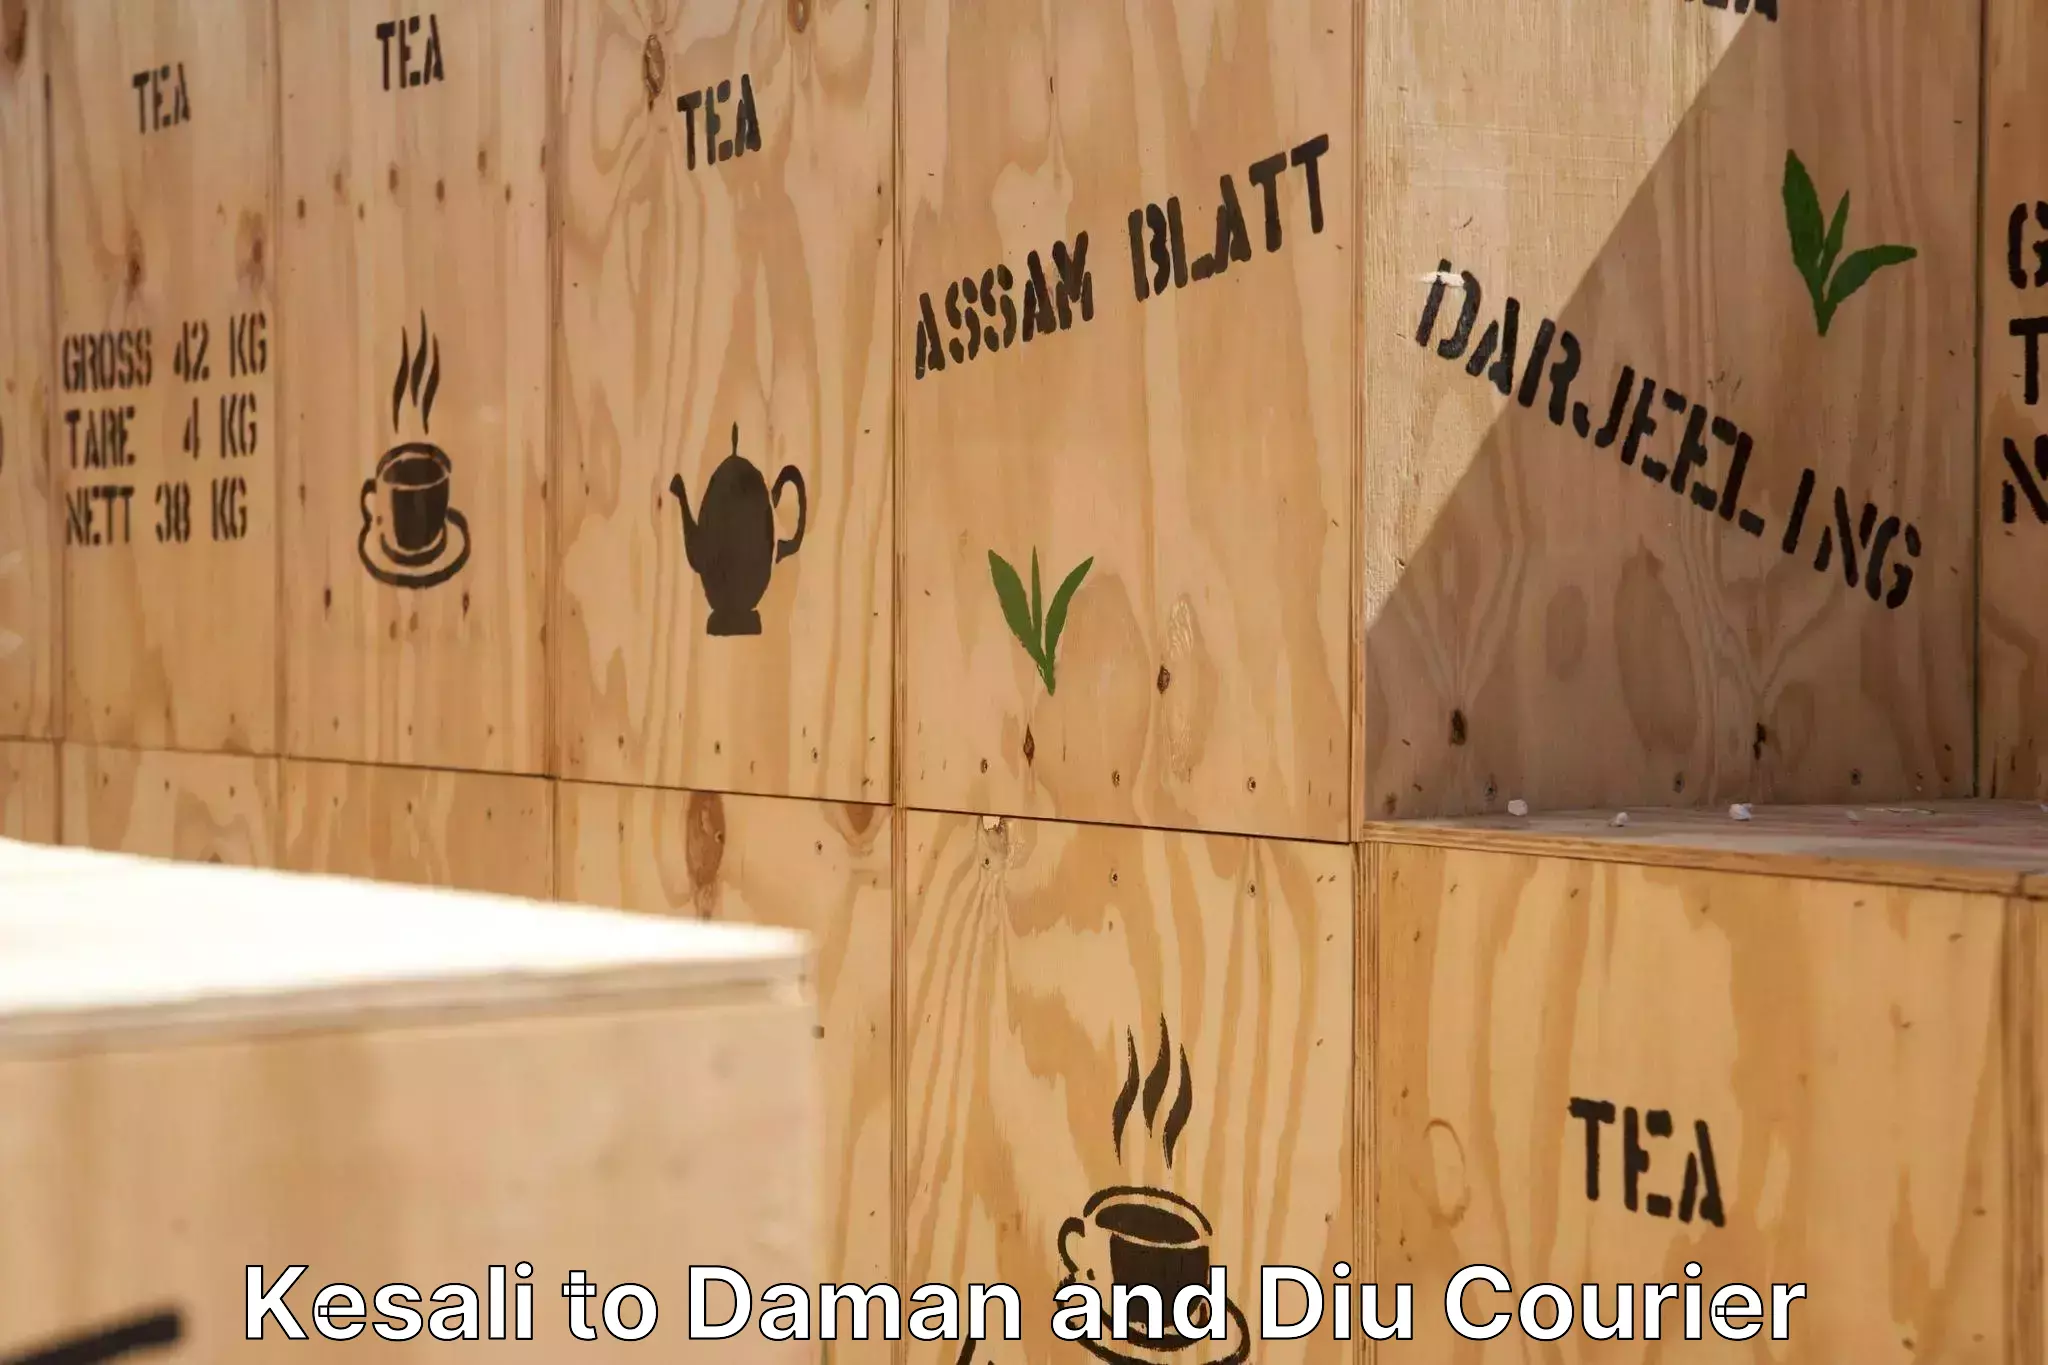 Professional moving company Kesali to Daman and Diu